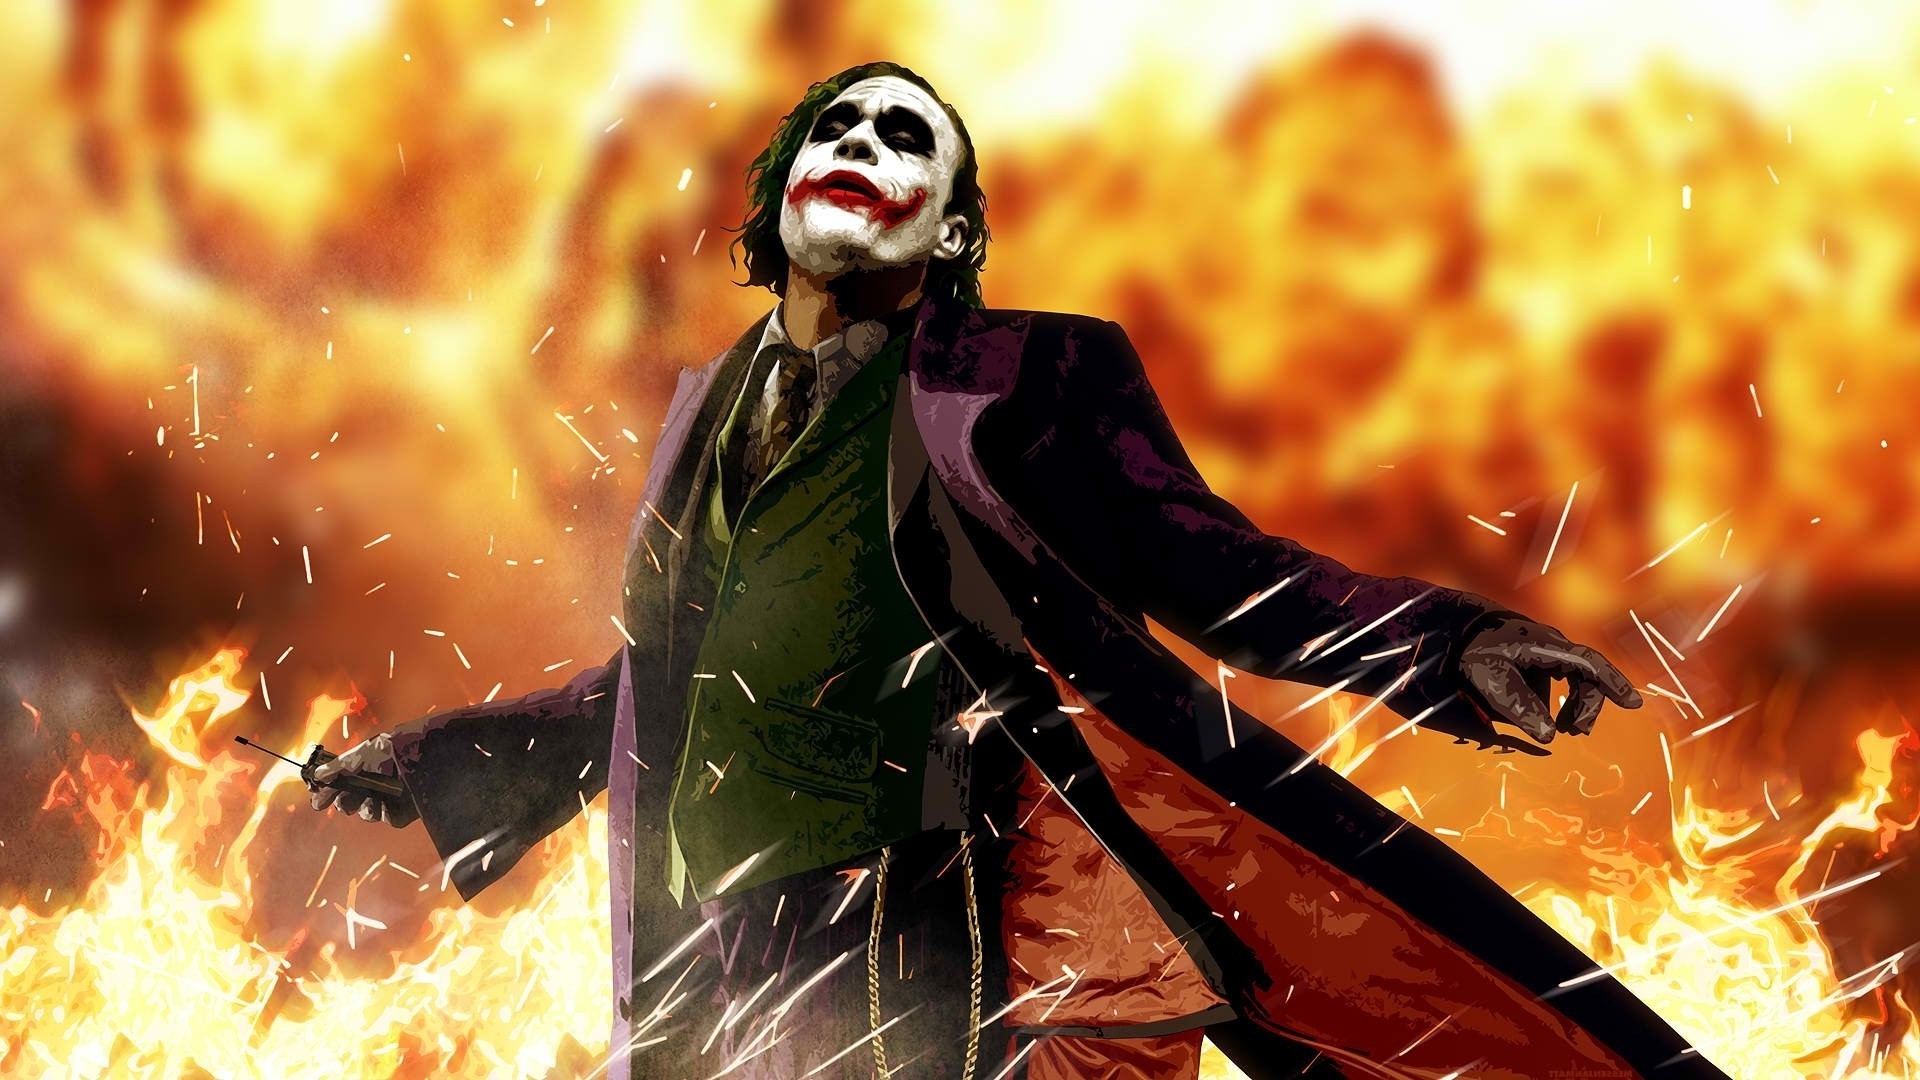 Anime, Heath Ledger, Movies, Joker, Batman, The Dark Knight Wallpapers HD / Desktop and Mobile Backgrounds